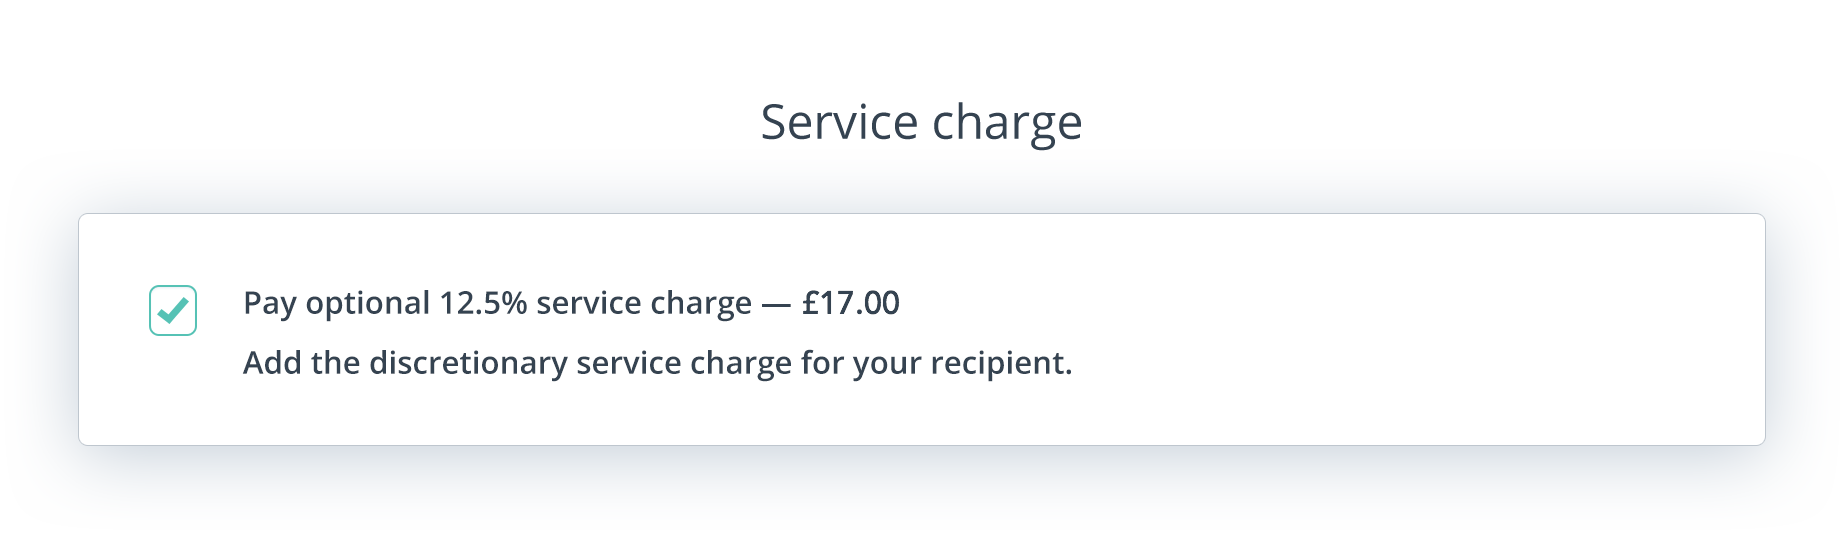 Giftpro interface showing service charge tick box